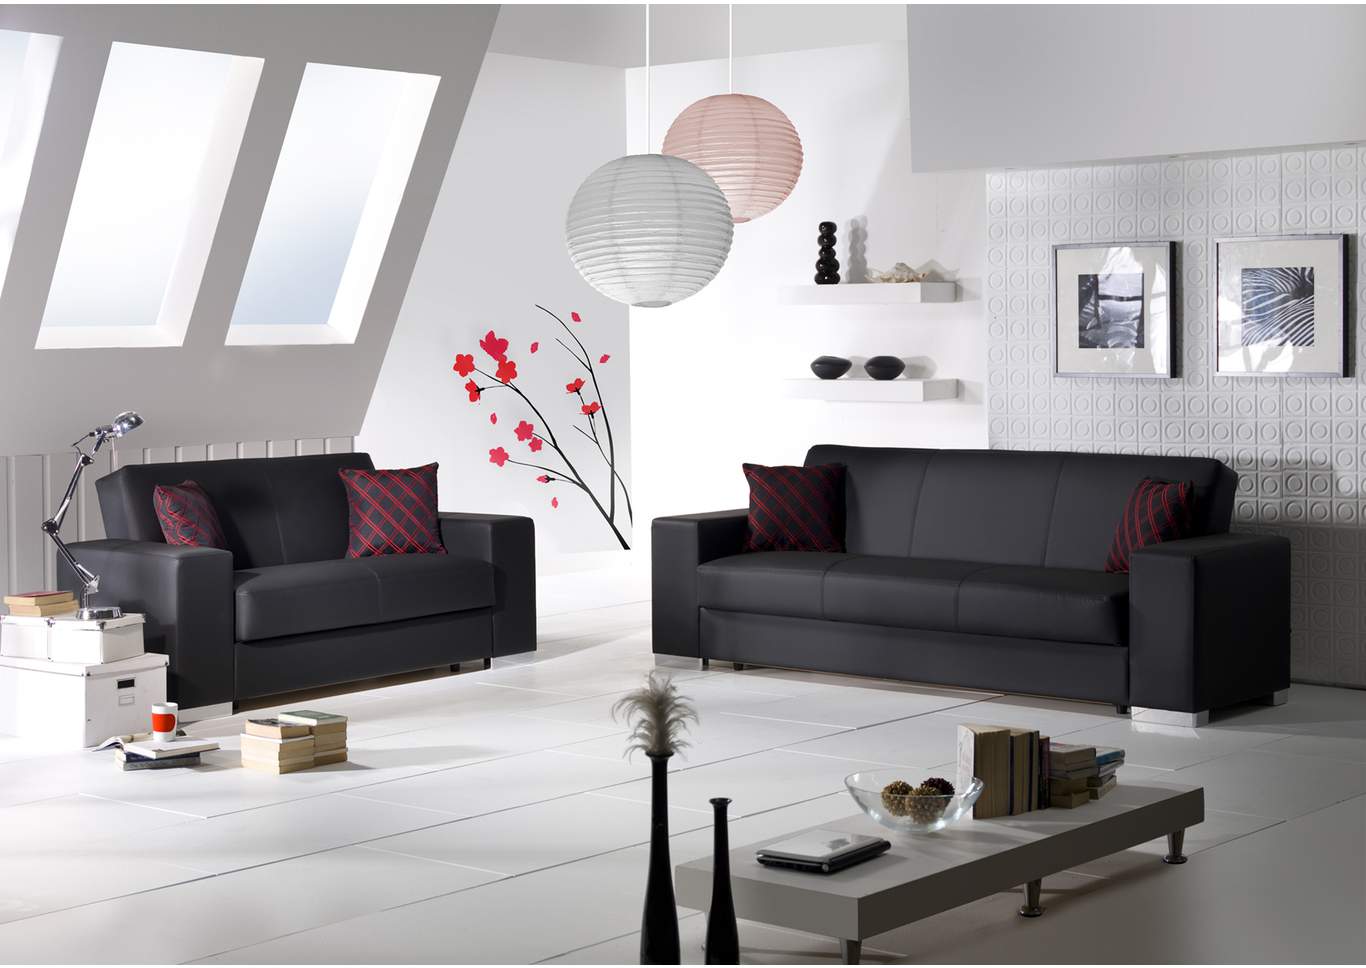 Kobe Santa Glory Black 3 Seat Sleeper Sofa,Hudson Furniture & Bedding